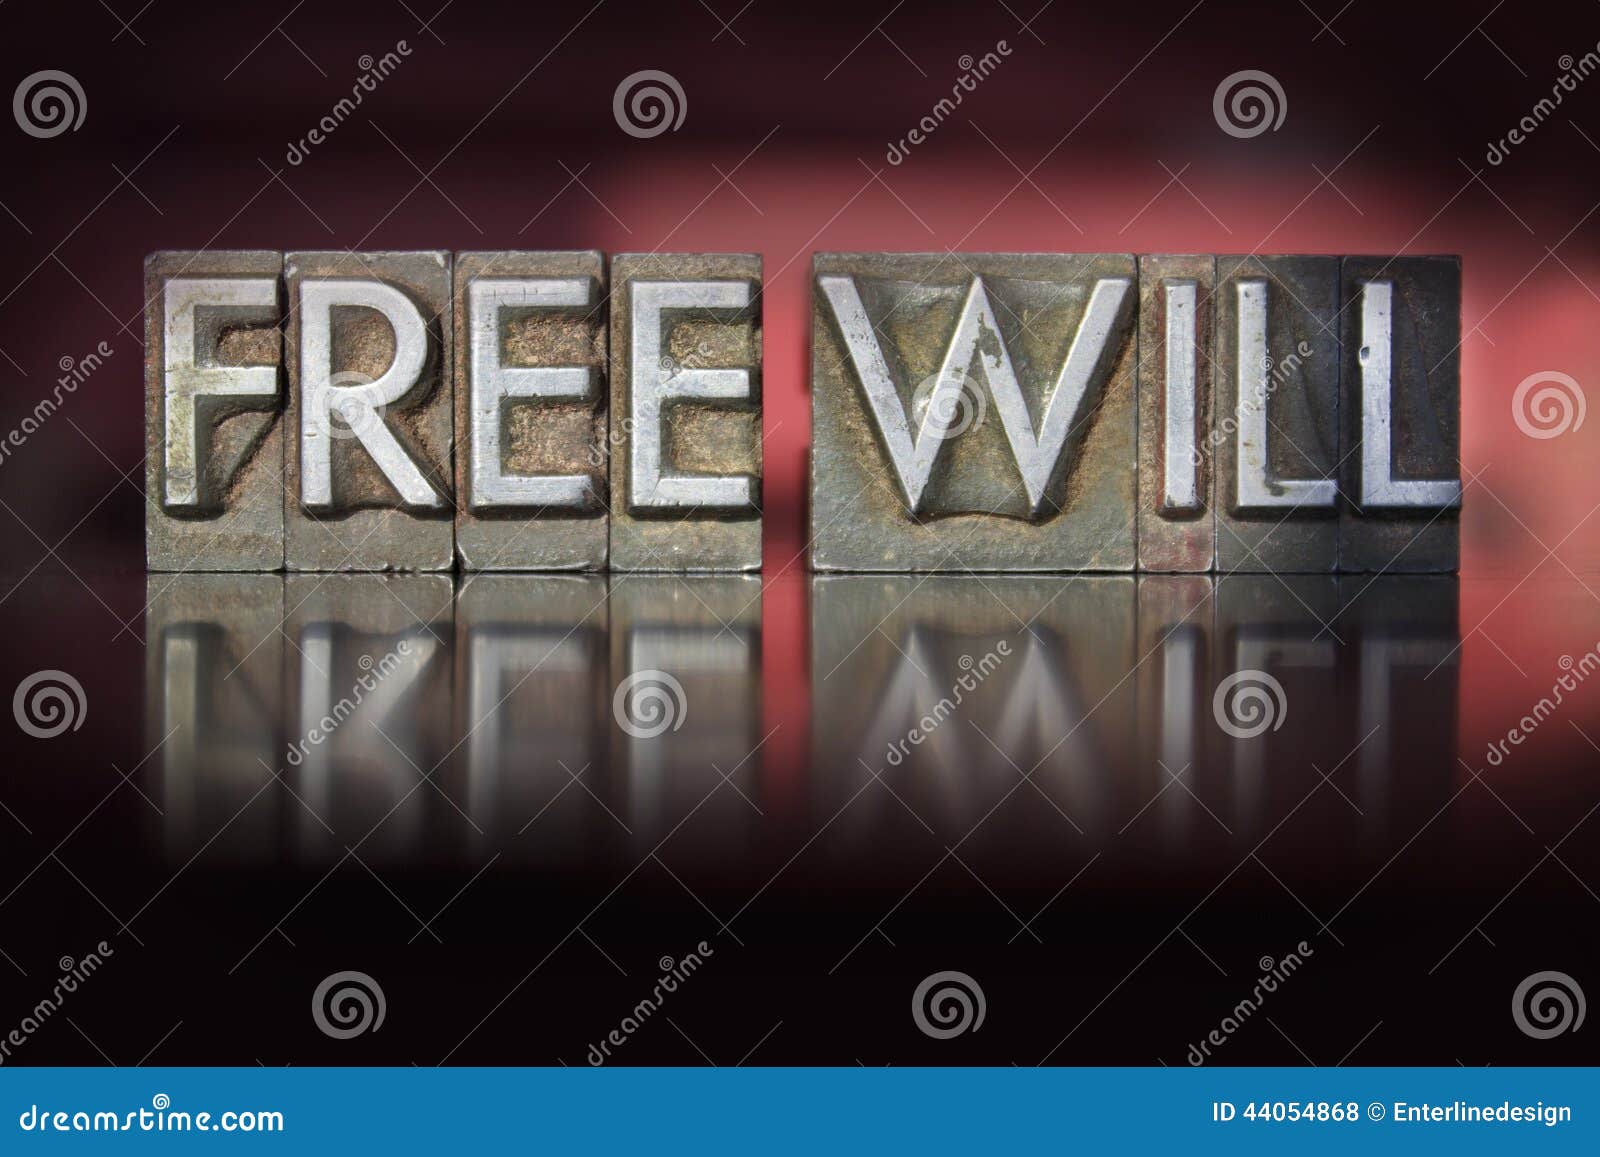 free will letterpress